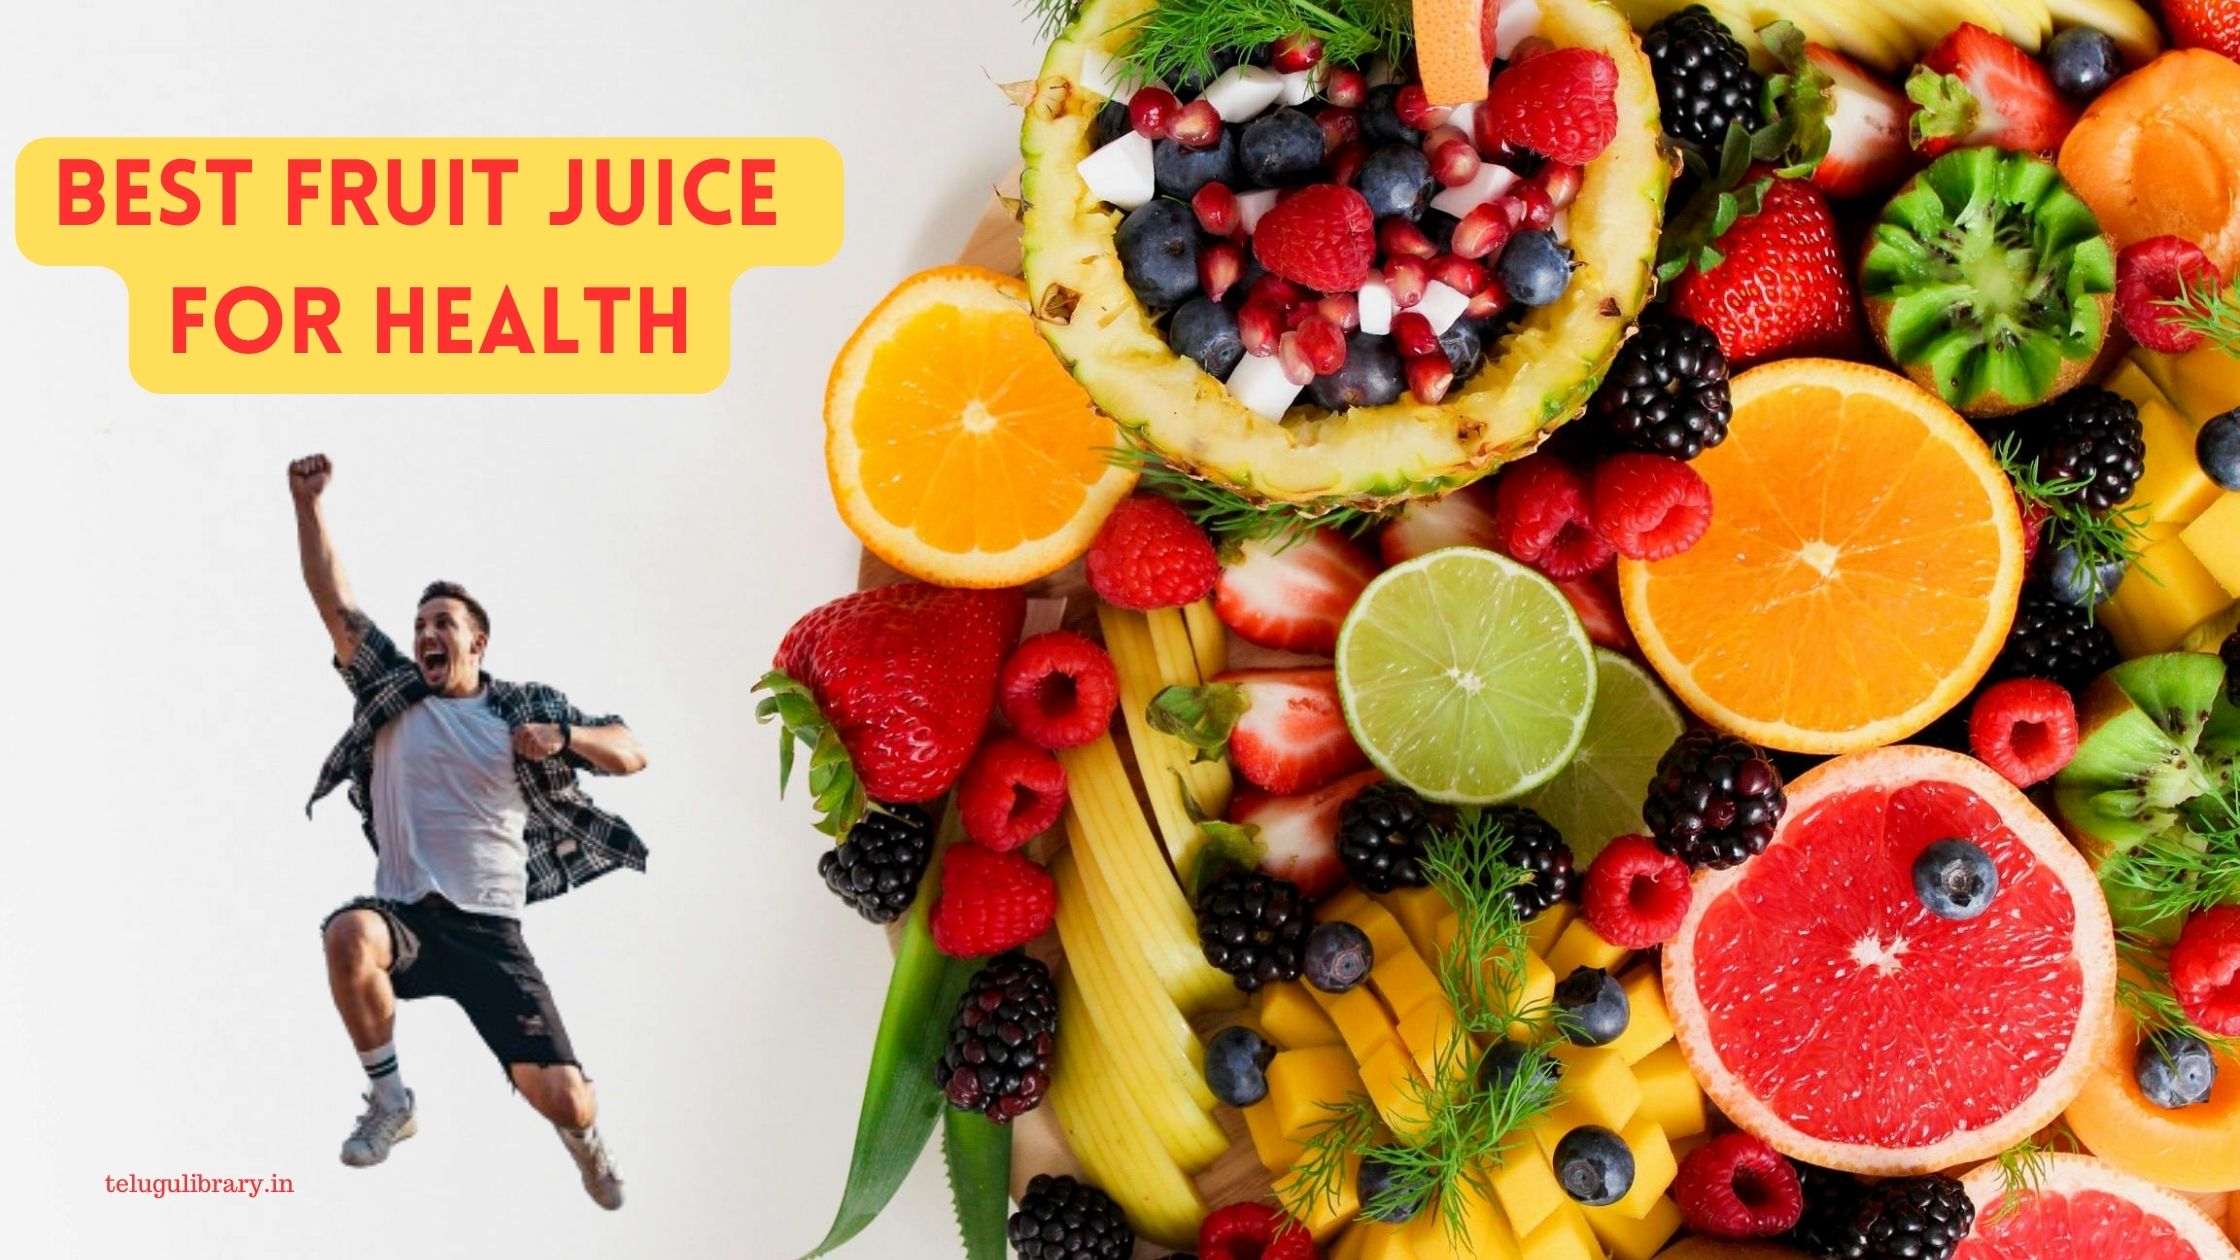 Best fruit juice for health